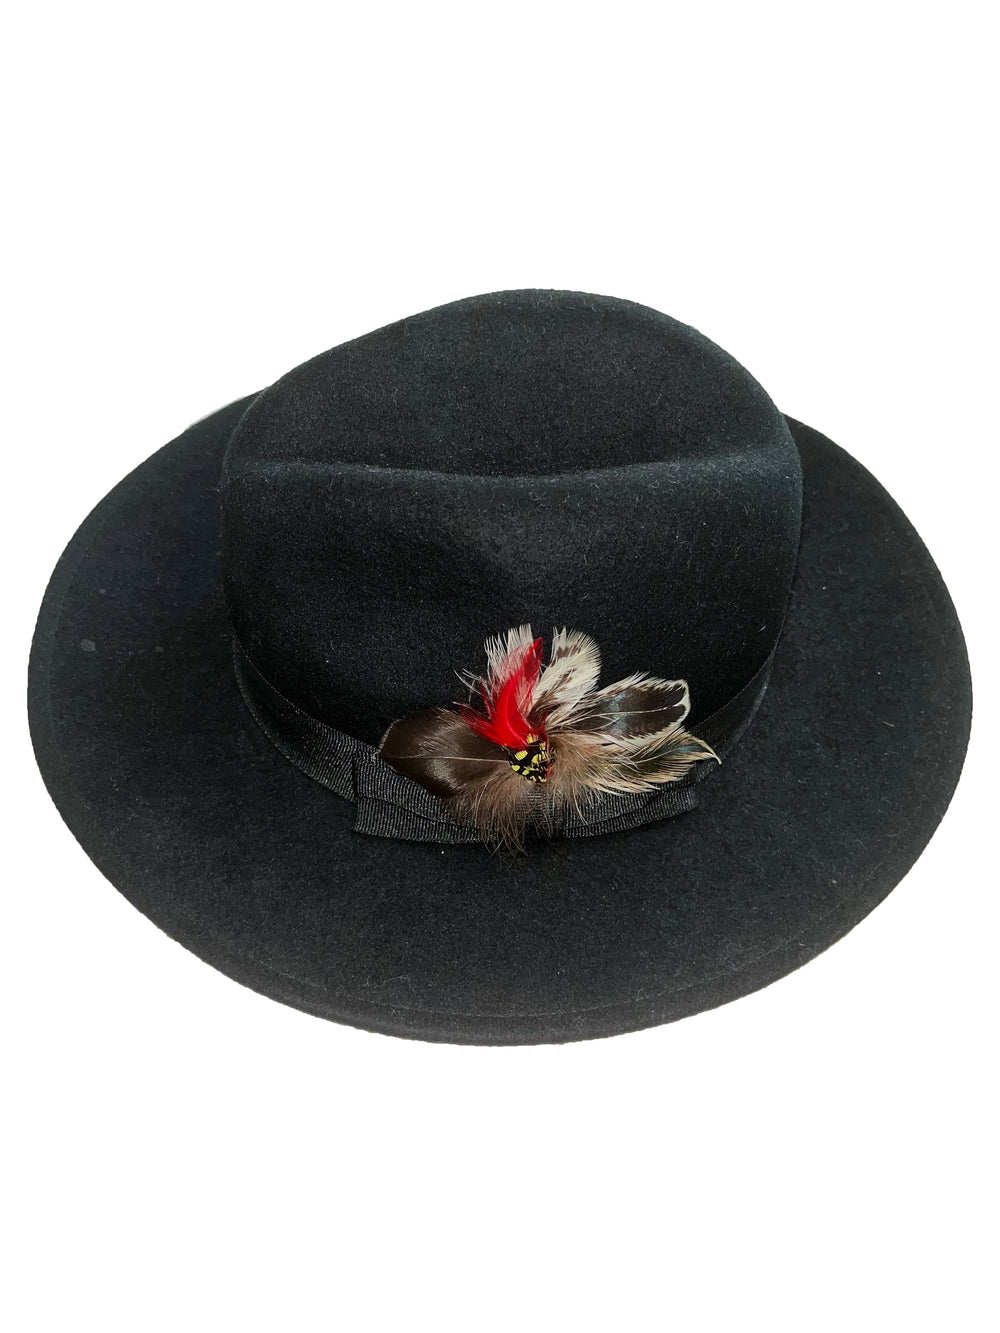 Gilbert's Medium Brim Fedora Hat with Feather